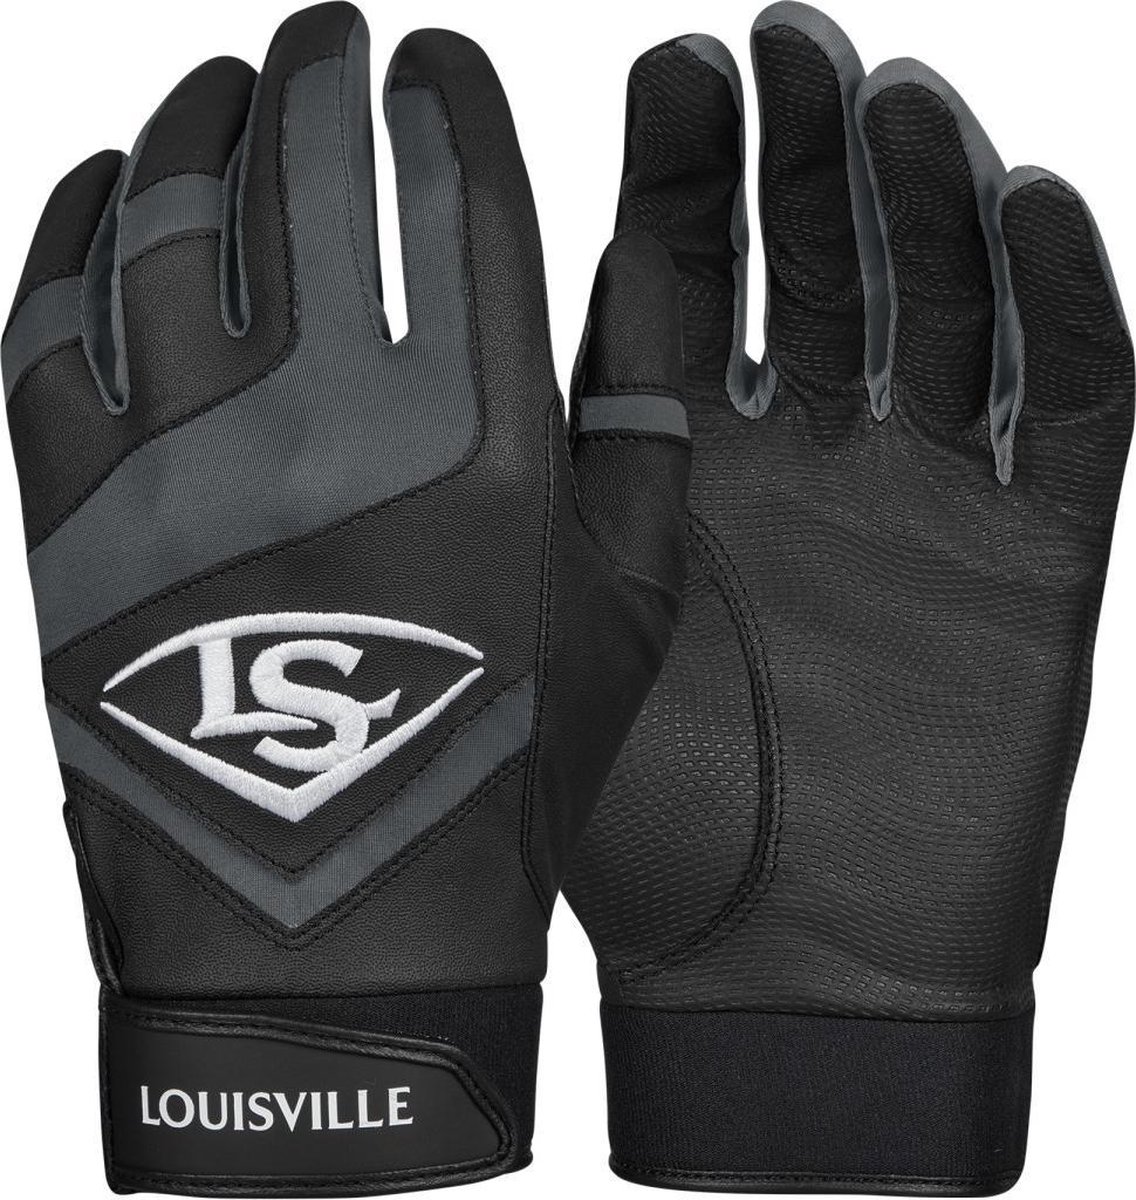 Louisville Slugger Genuine Batting Gloves Black Youth Small